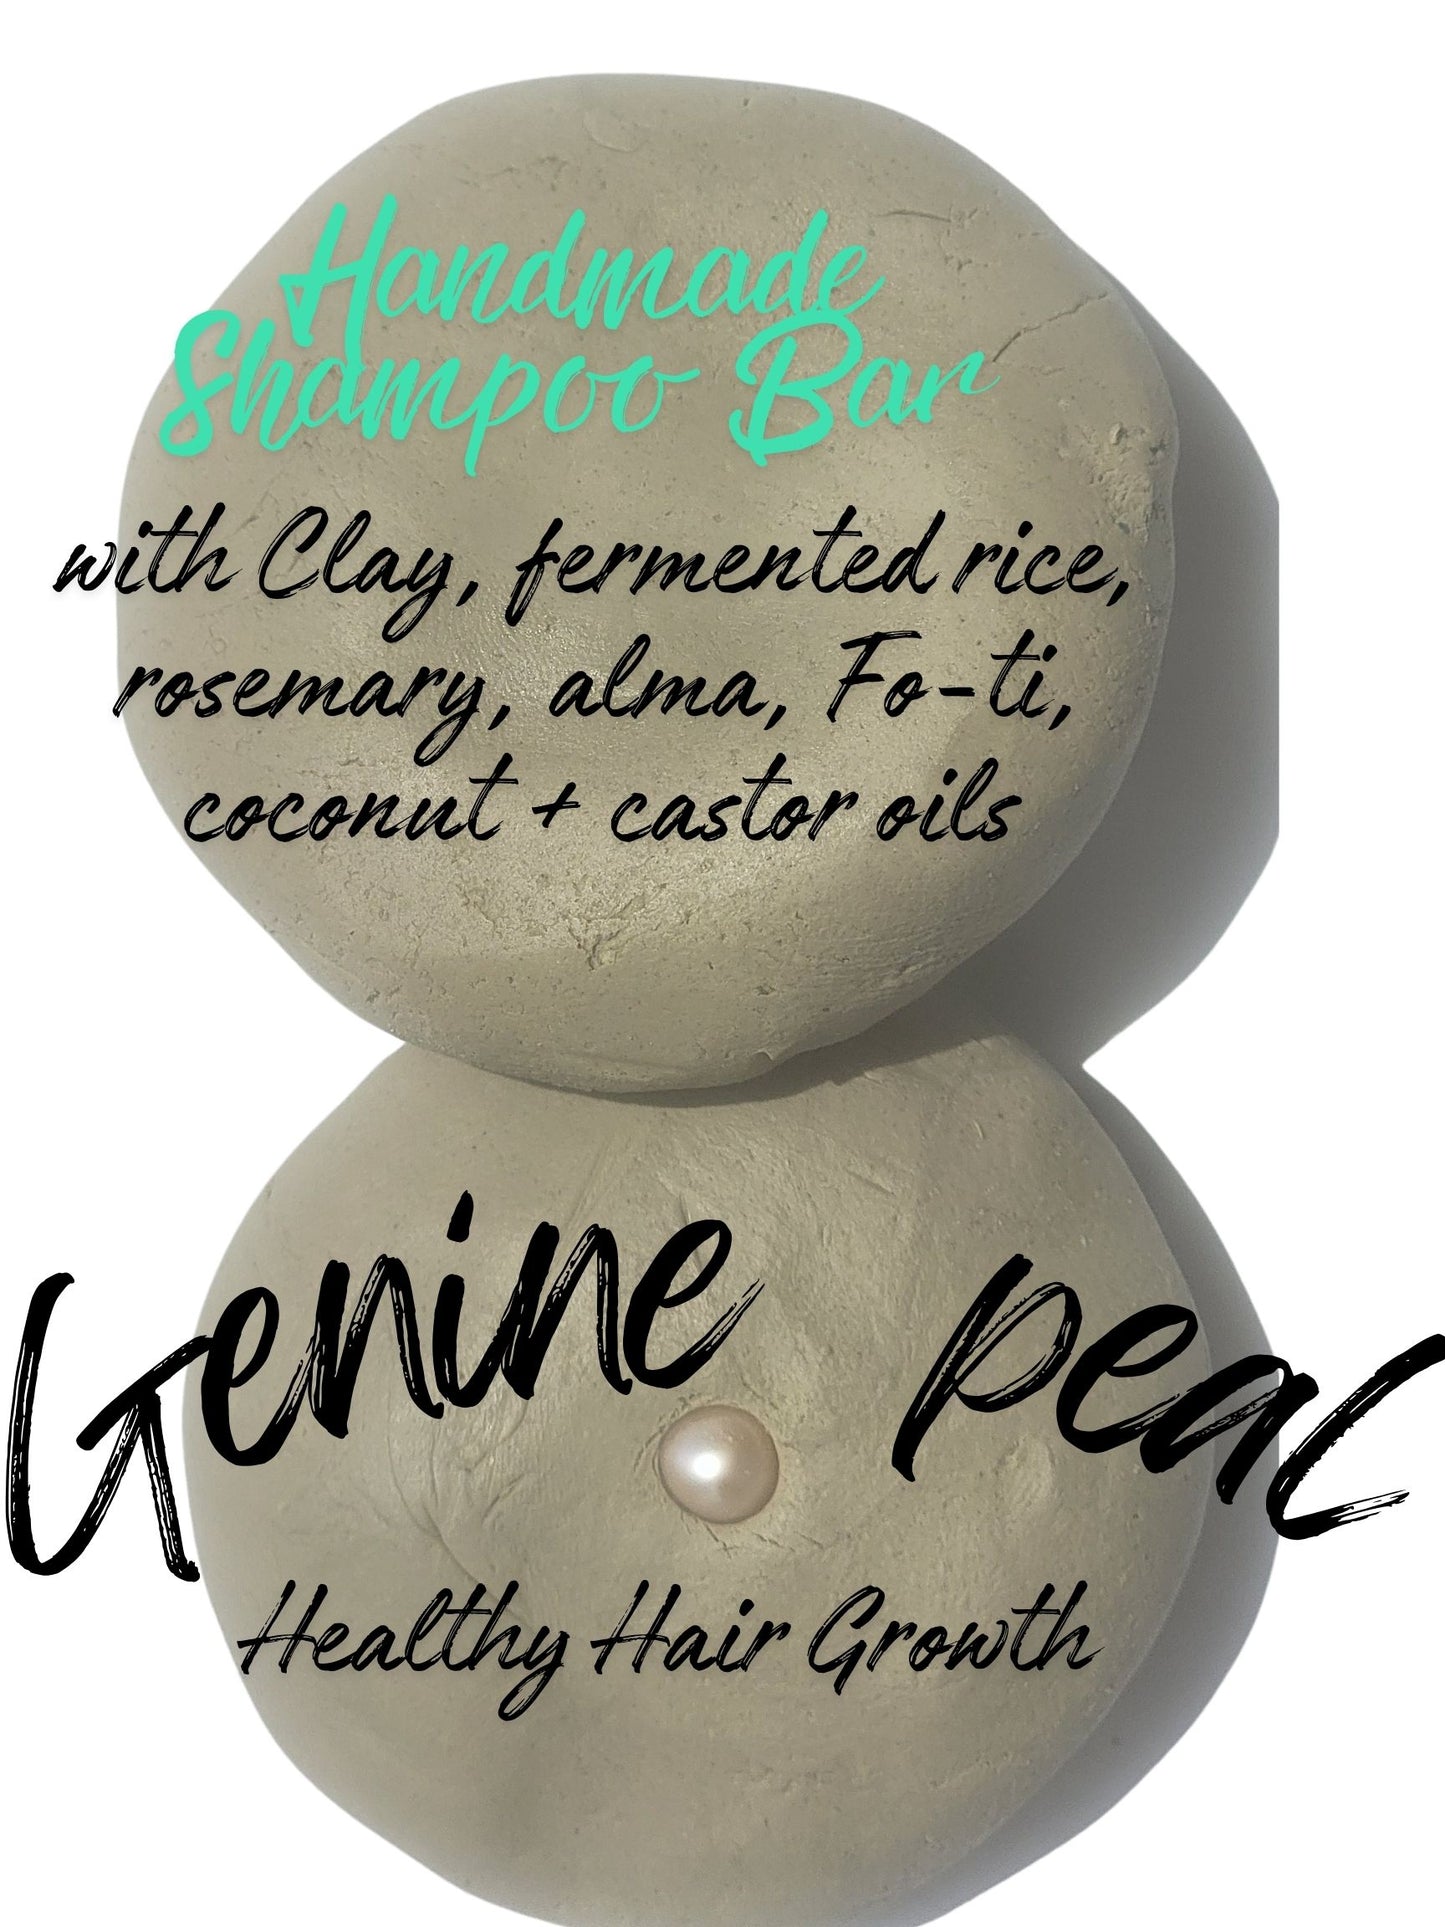 Handmade Healthy hair-growth enhancing Shampoo Bar 100g with Holistic mindful energy for scalp and hair fermented rice, rosemary, alma, biotin, keratin, genuine pearl…